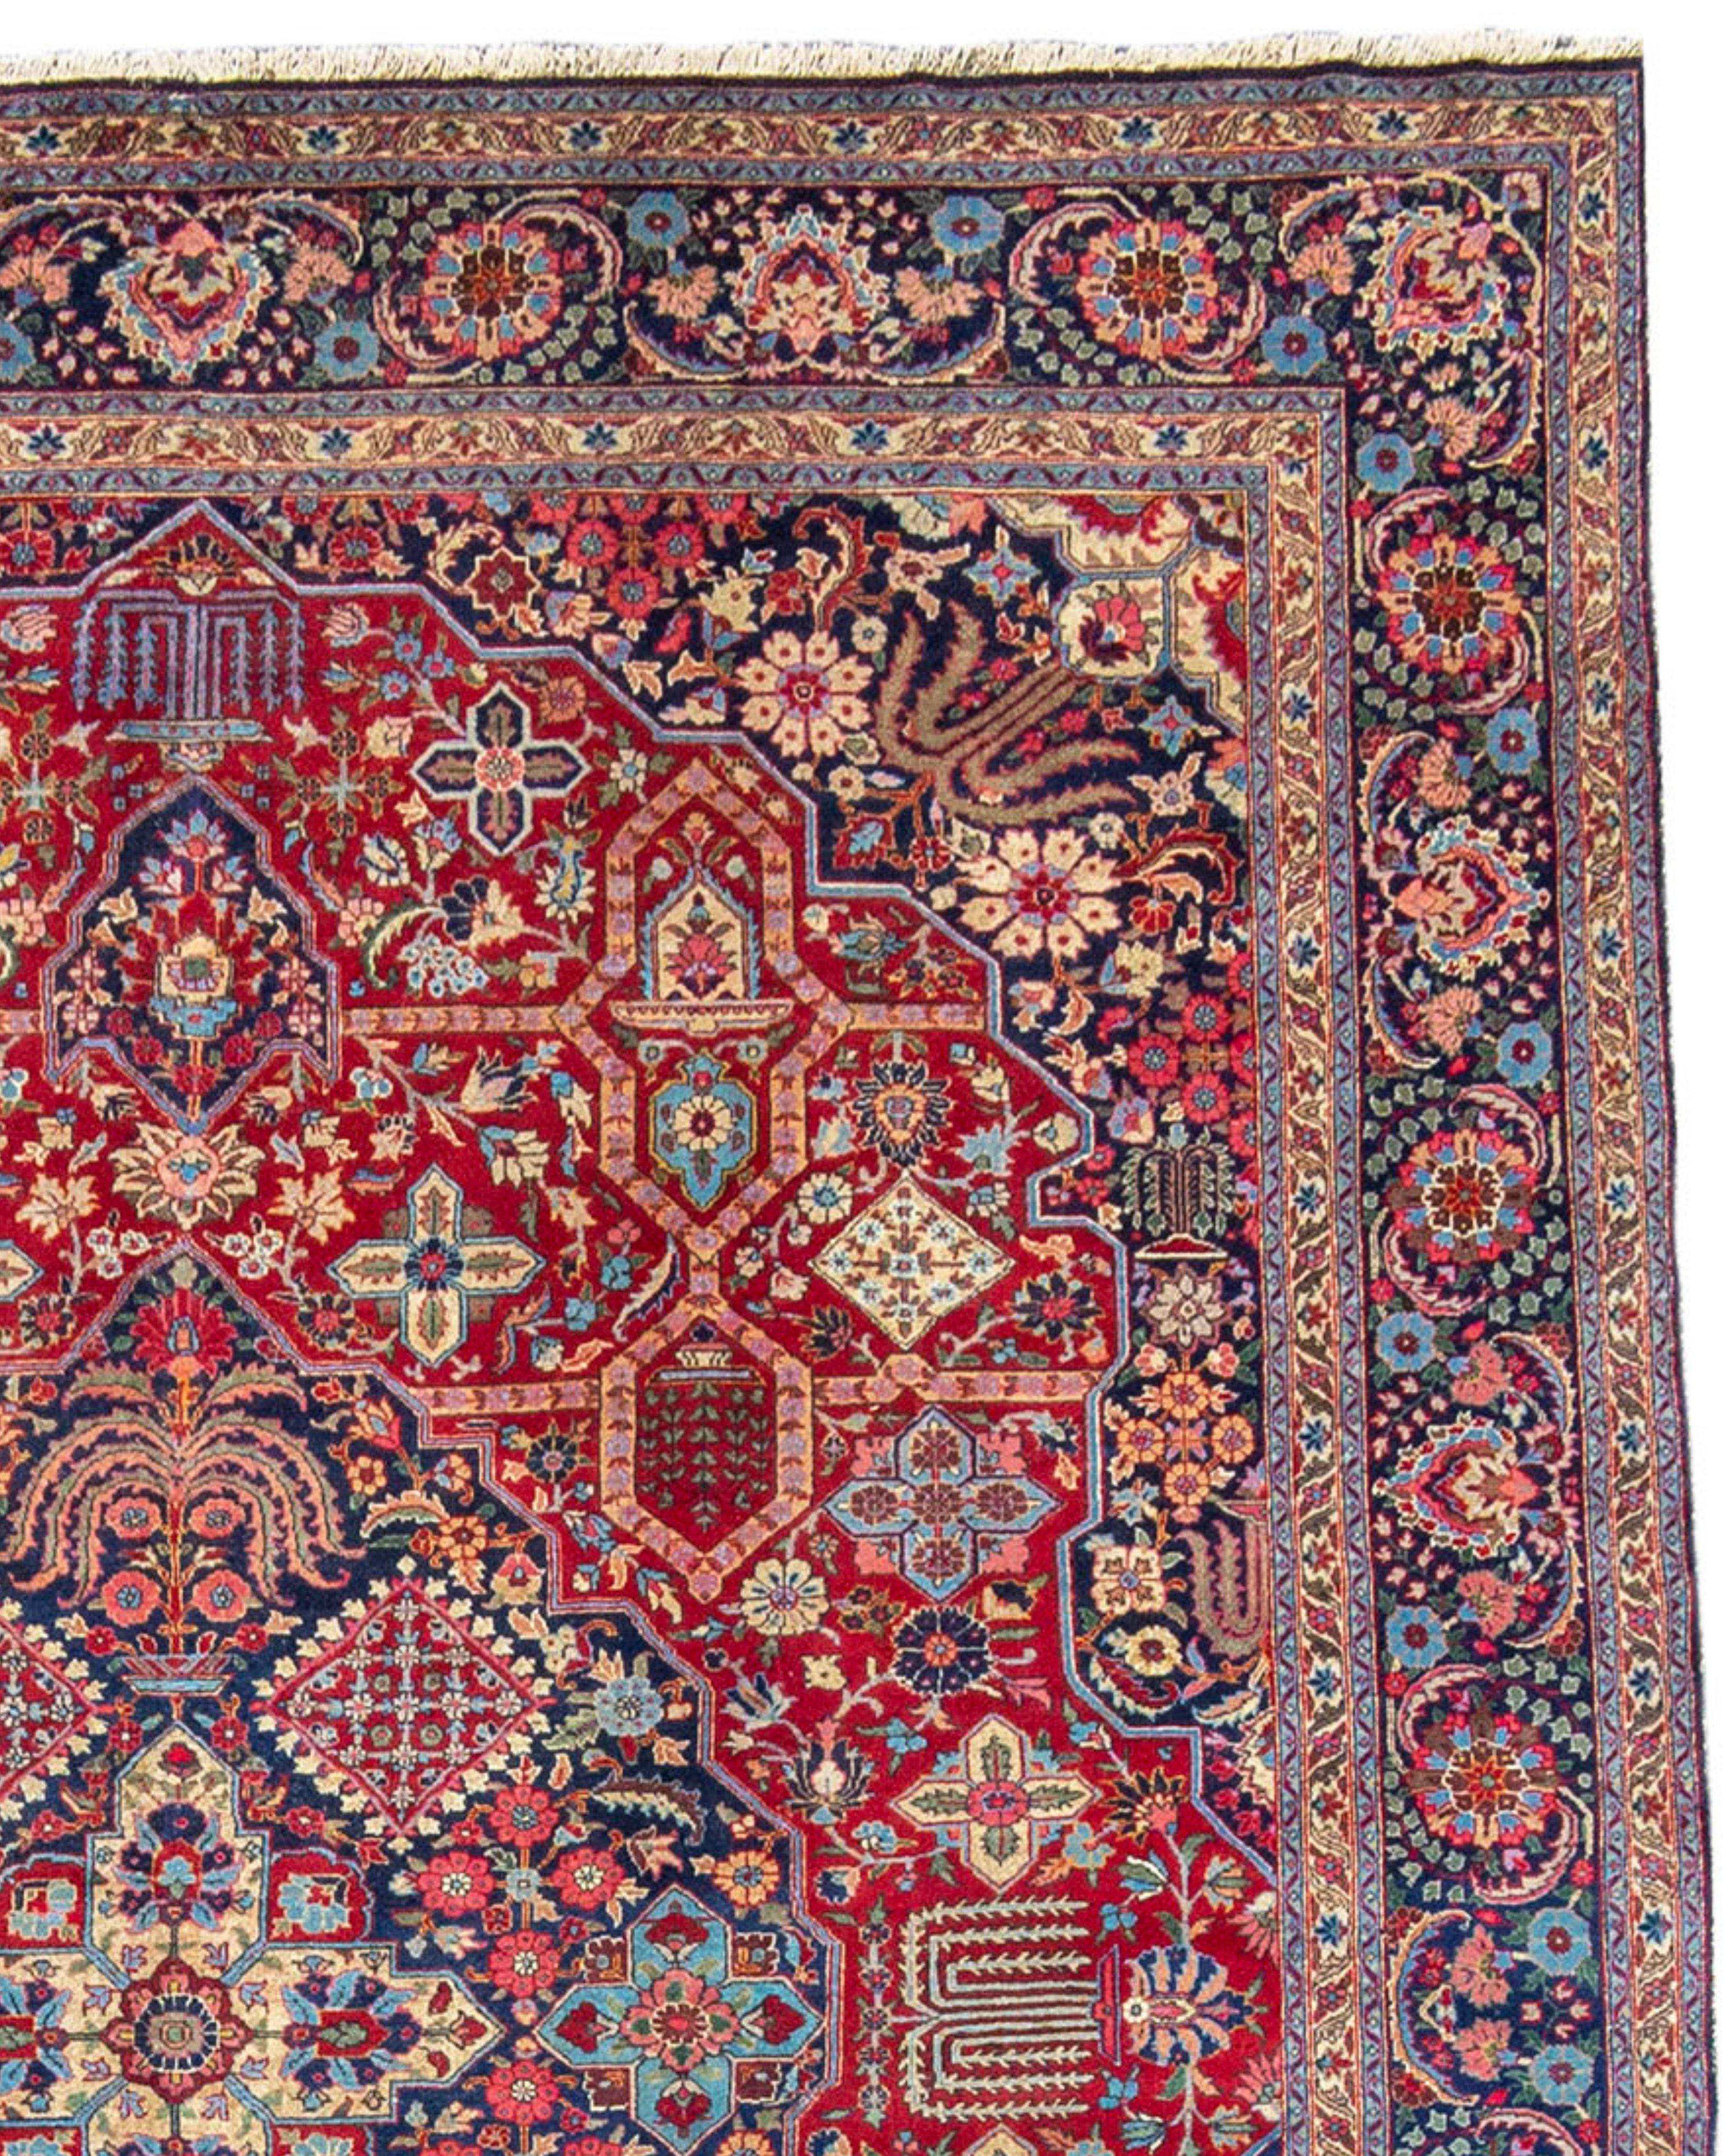 Antique Persian Tabriz Rug, c. 1940

Dimensions: 11'7